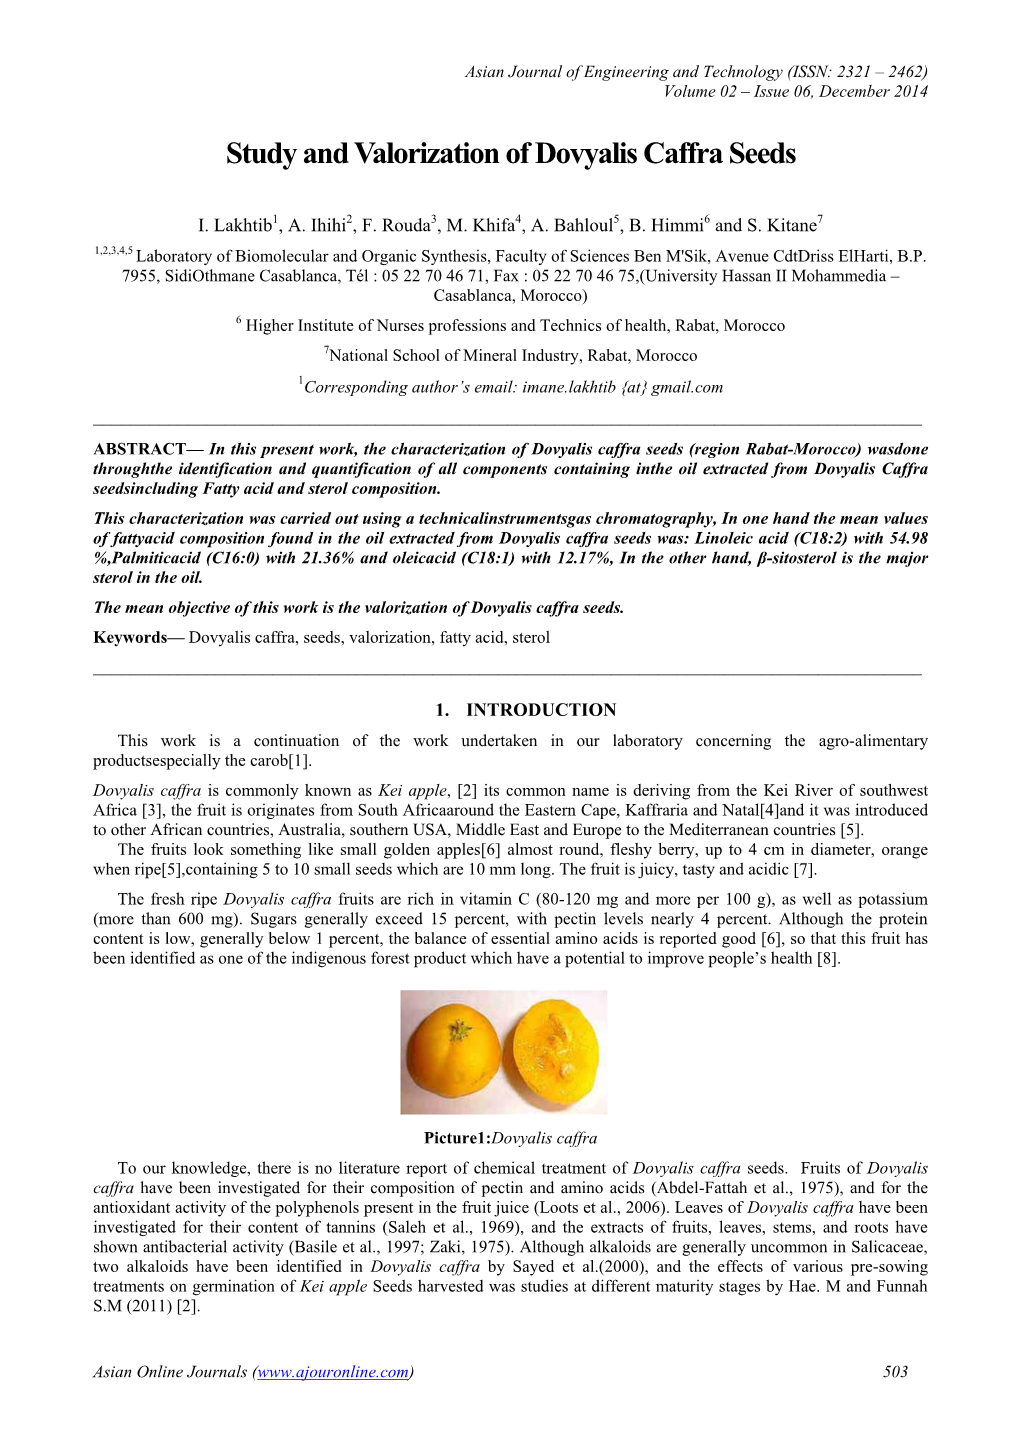 Study and Valorization of Dovyalis Caffra Seeds